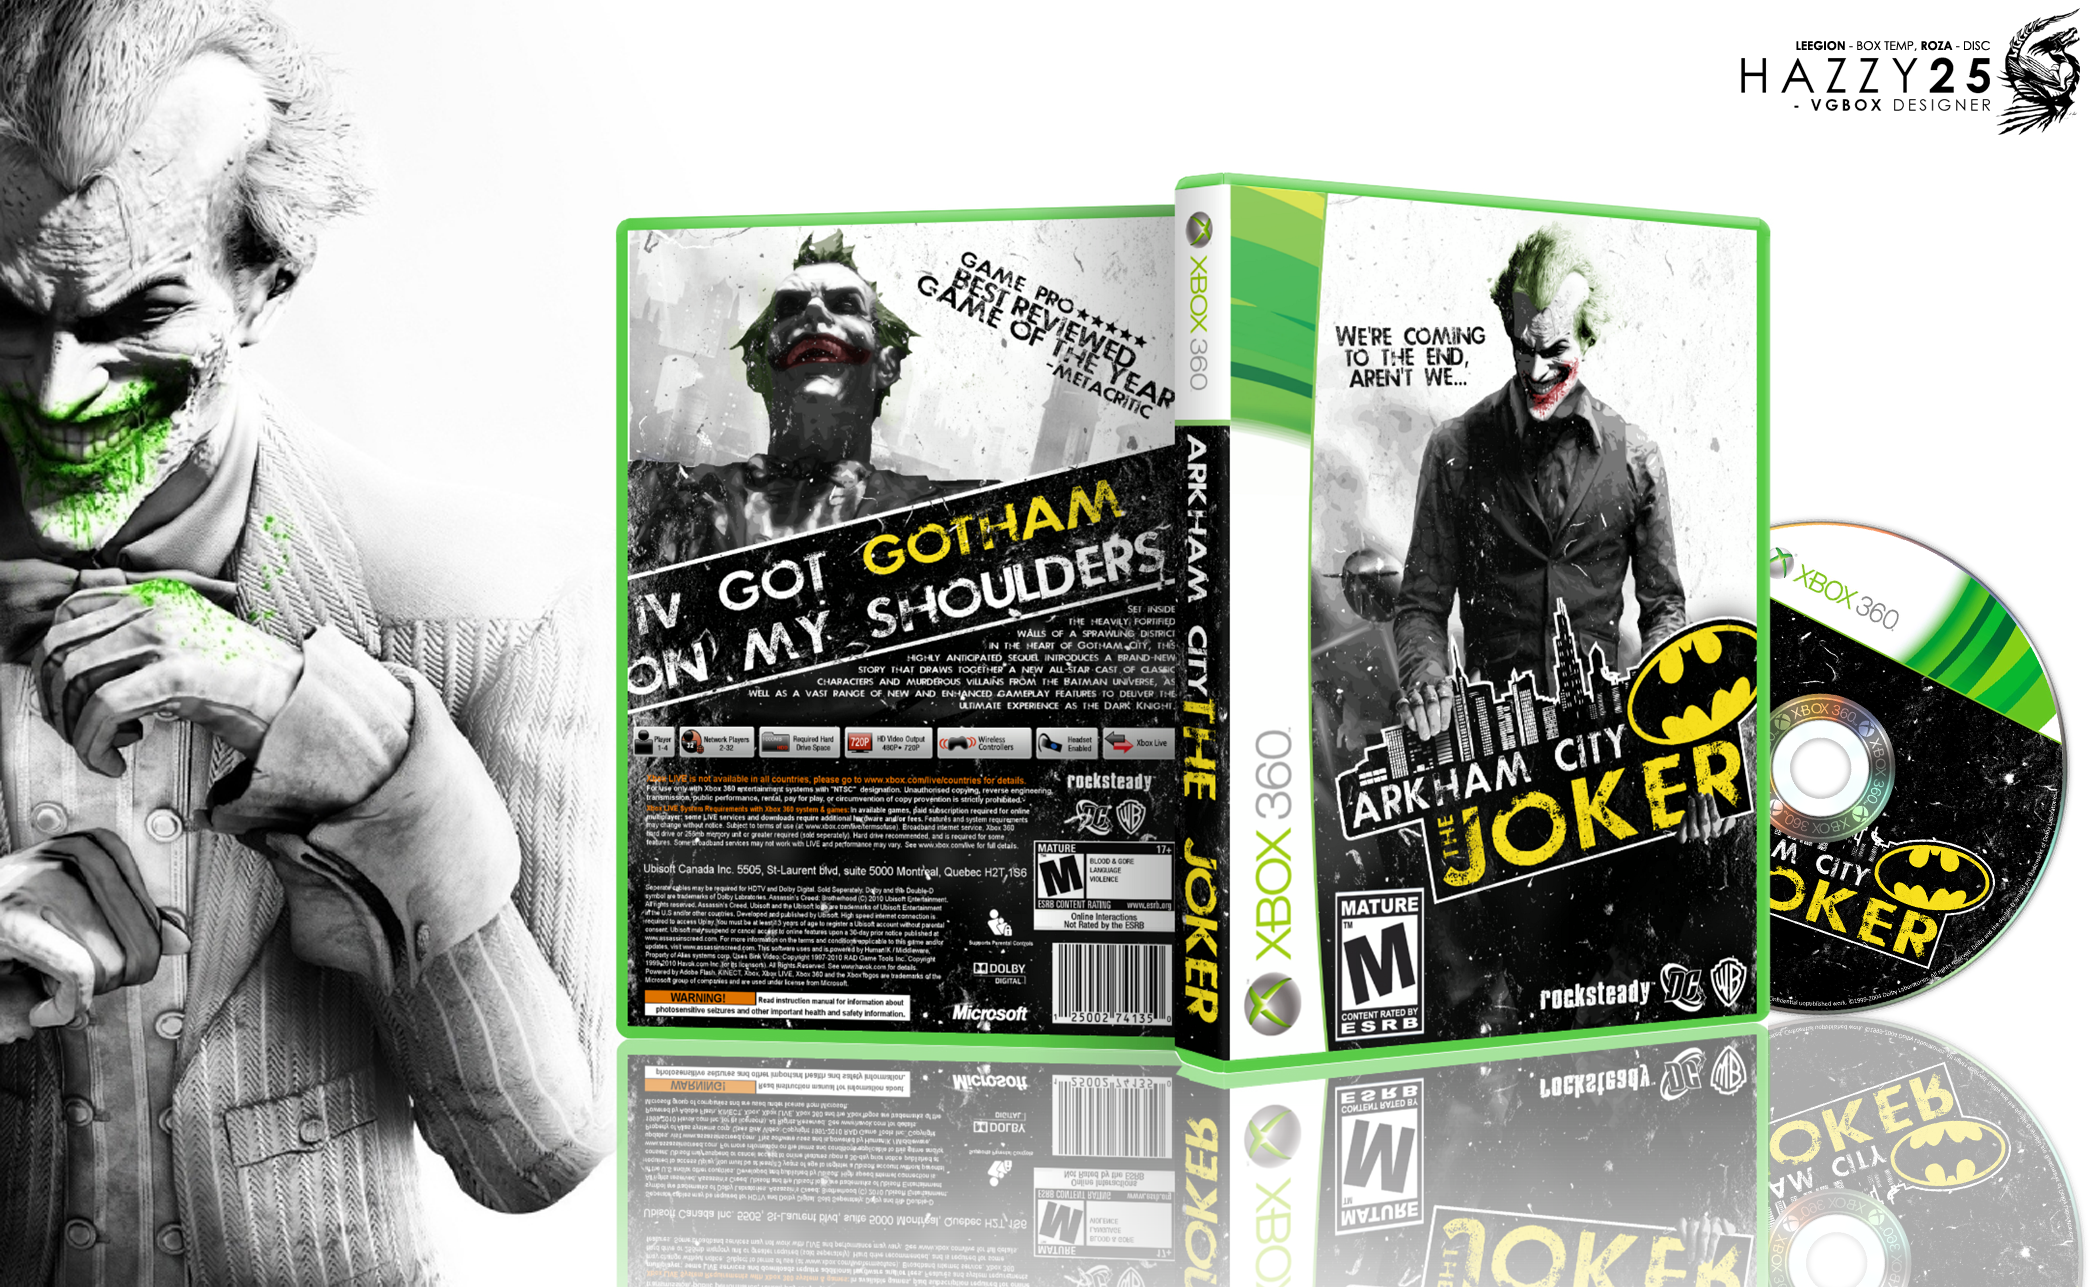 Batman Arkham City: Joker Edition box cover